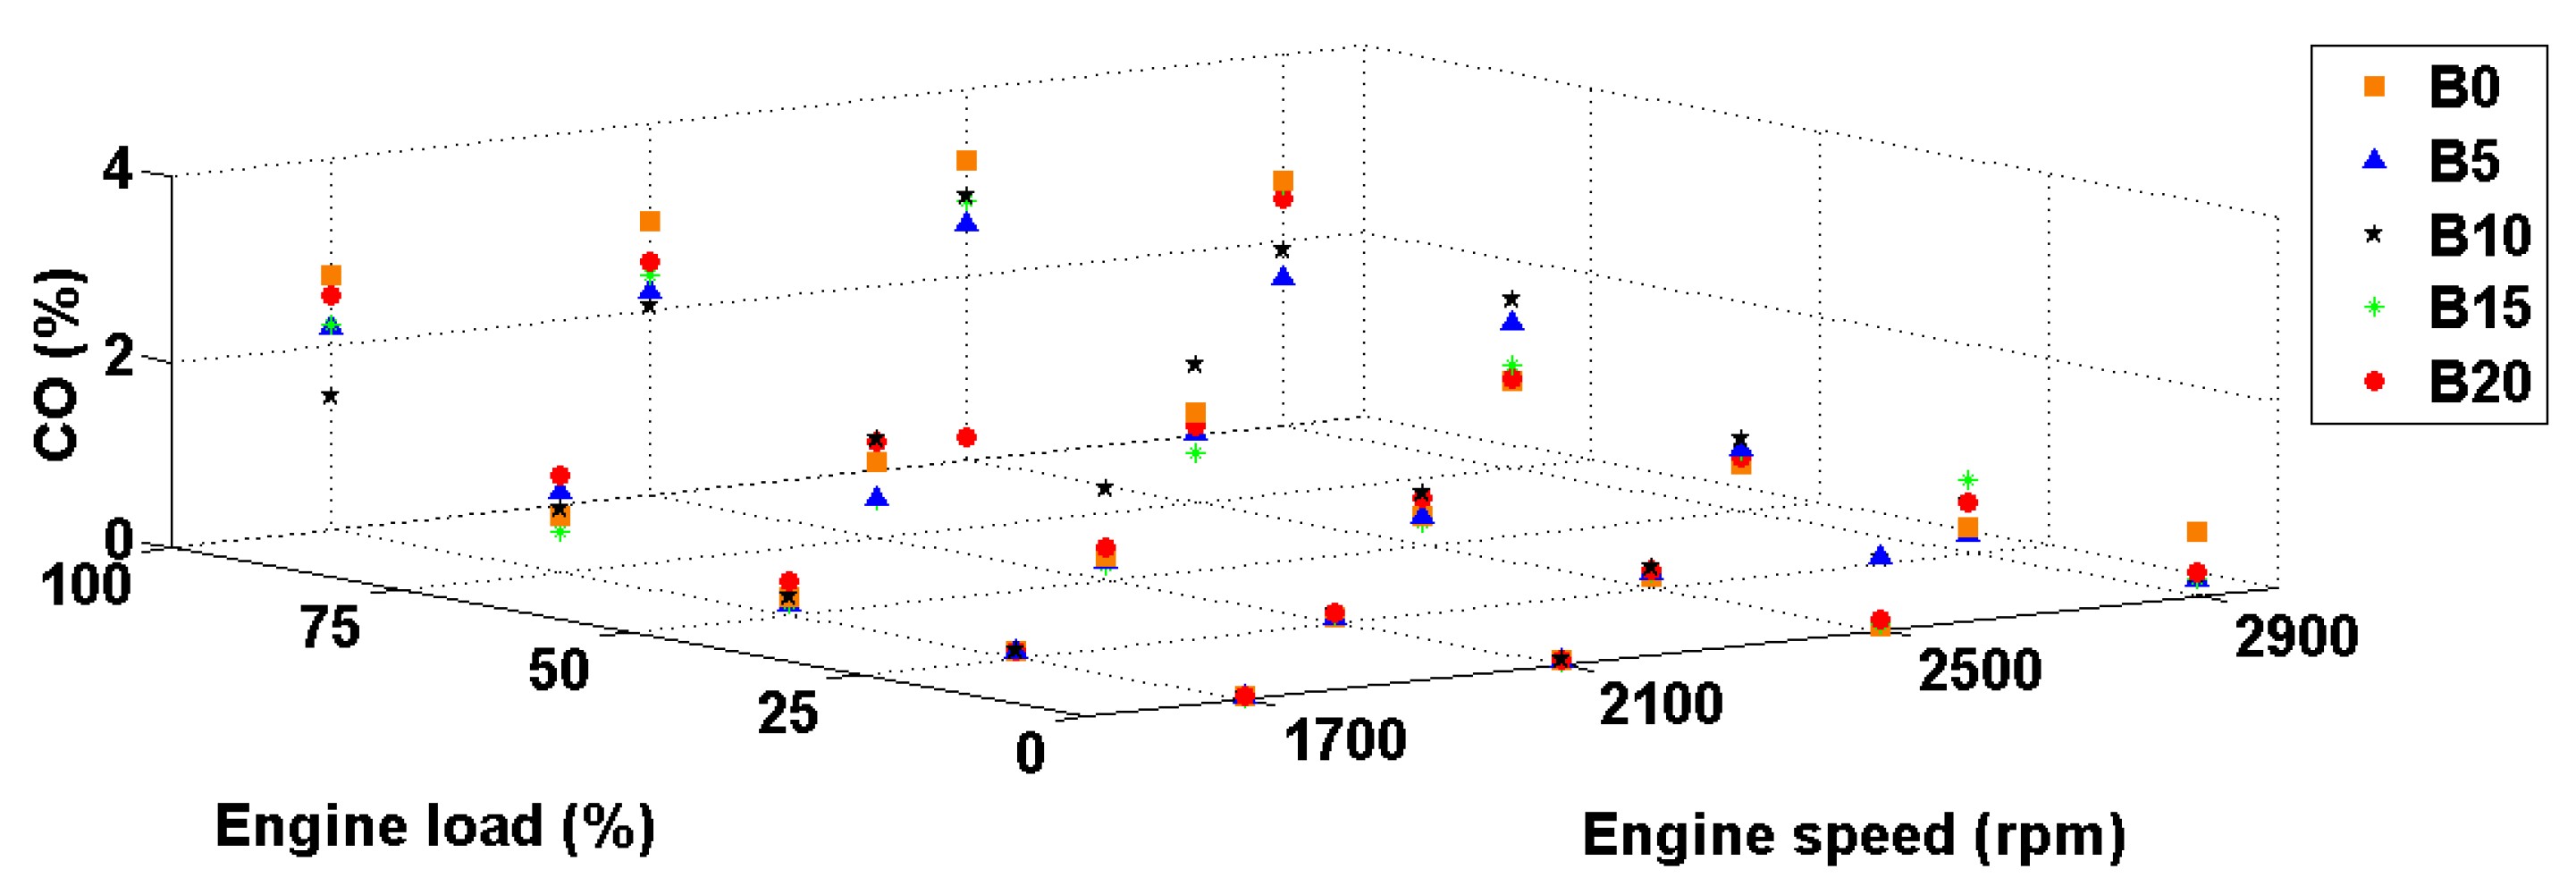 Valve Timing Diagram Of 4 Stroke Petrol Engine Energies Free Full Text Of Valve Timing Diagram Of 4 Stroke Petrol Engine